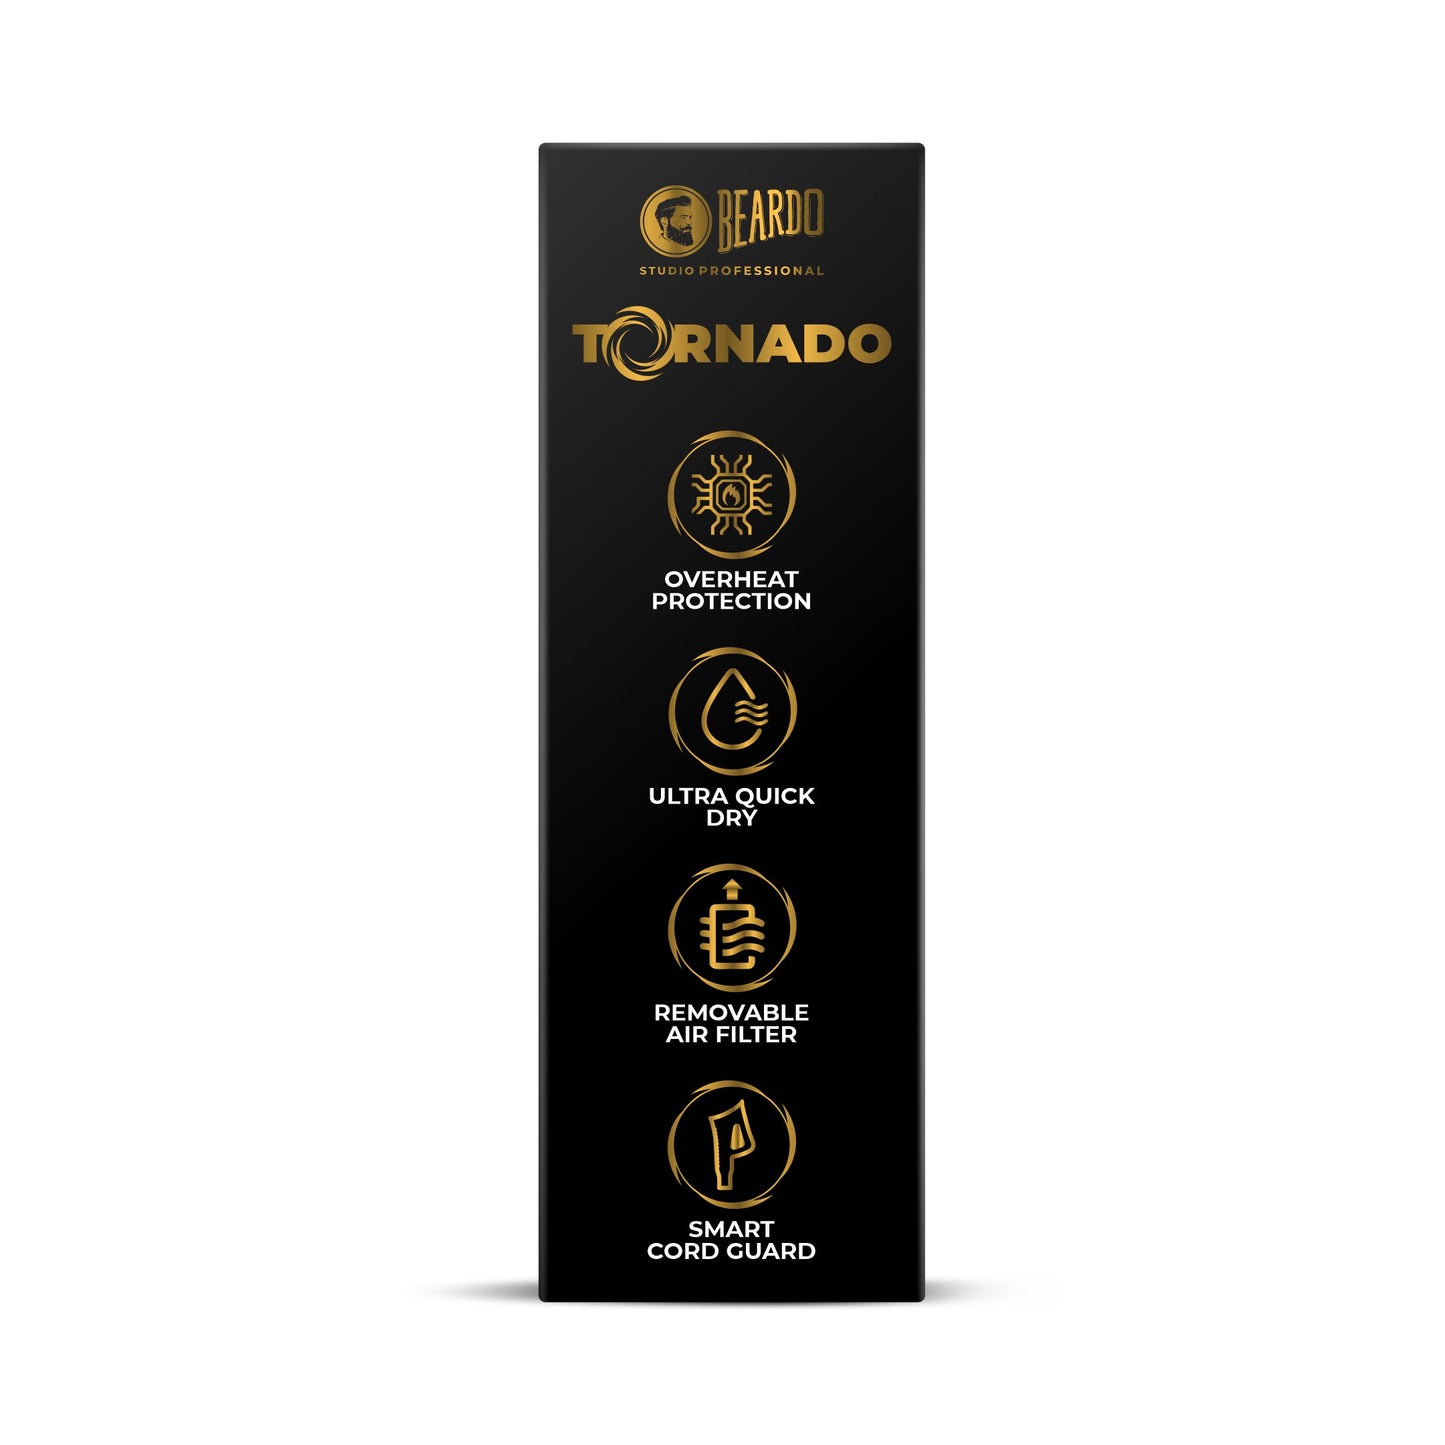 Beardo Studio Professional Tornado Hair Dryer